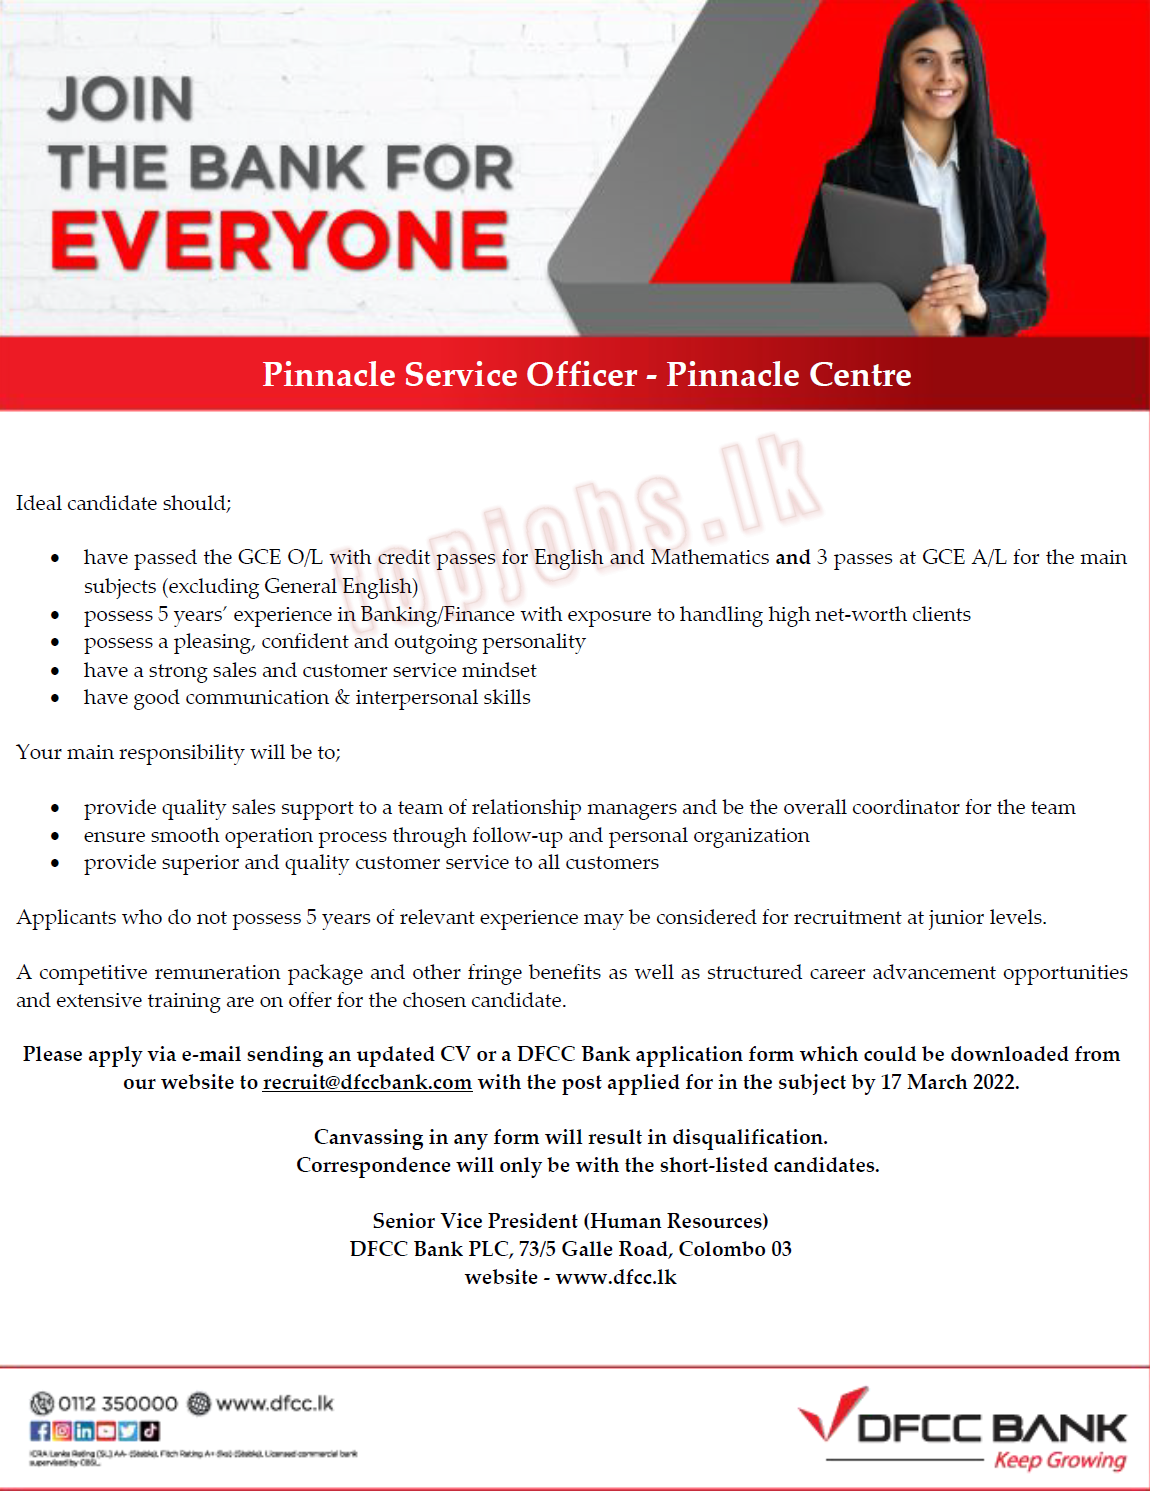 Pinnacle Service Officer Vacancies in DFCC Bank